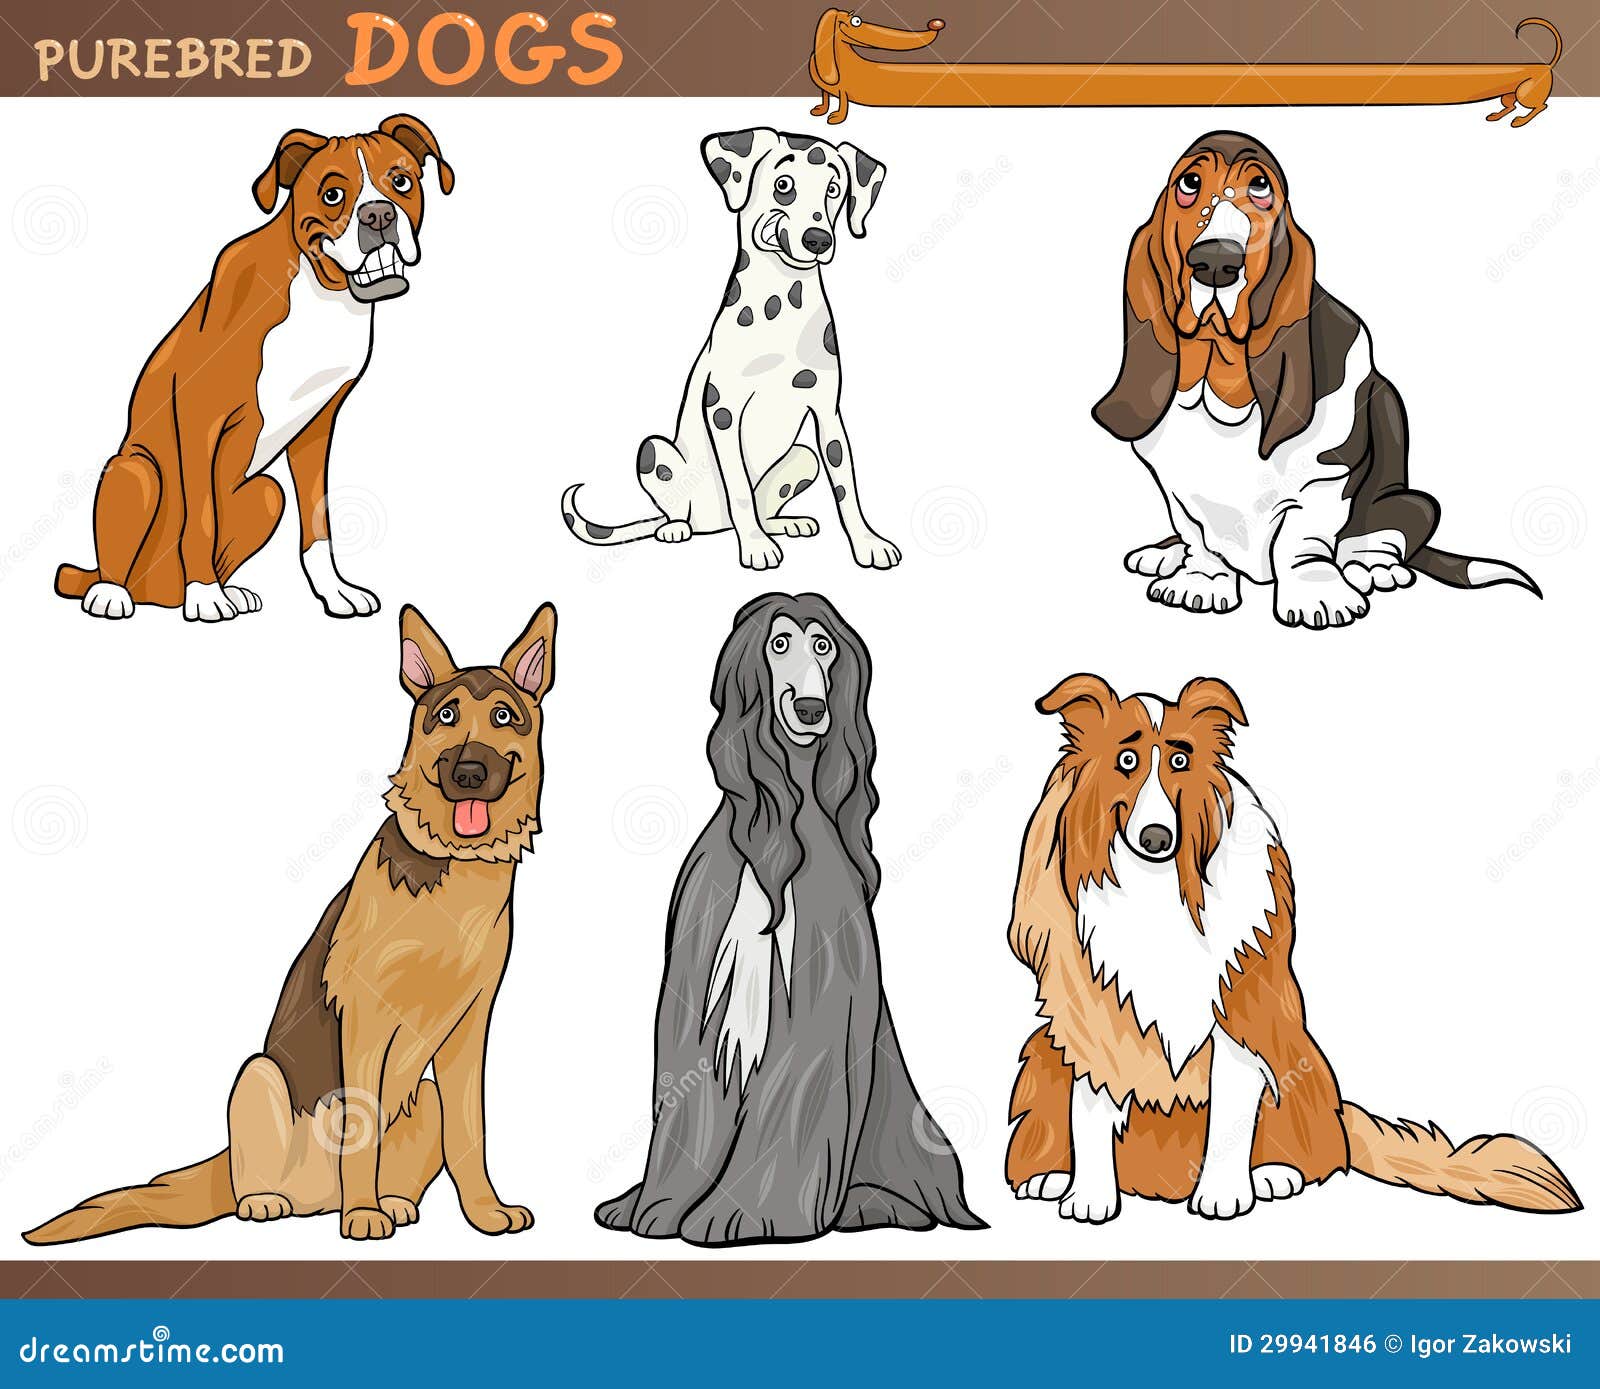 purebred dogs cartoon  set